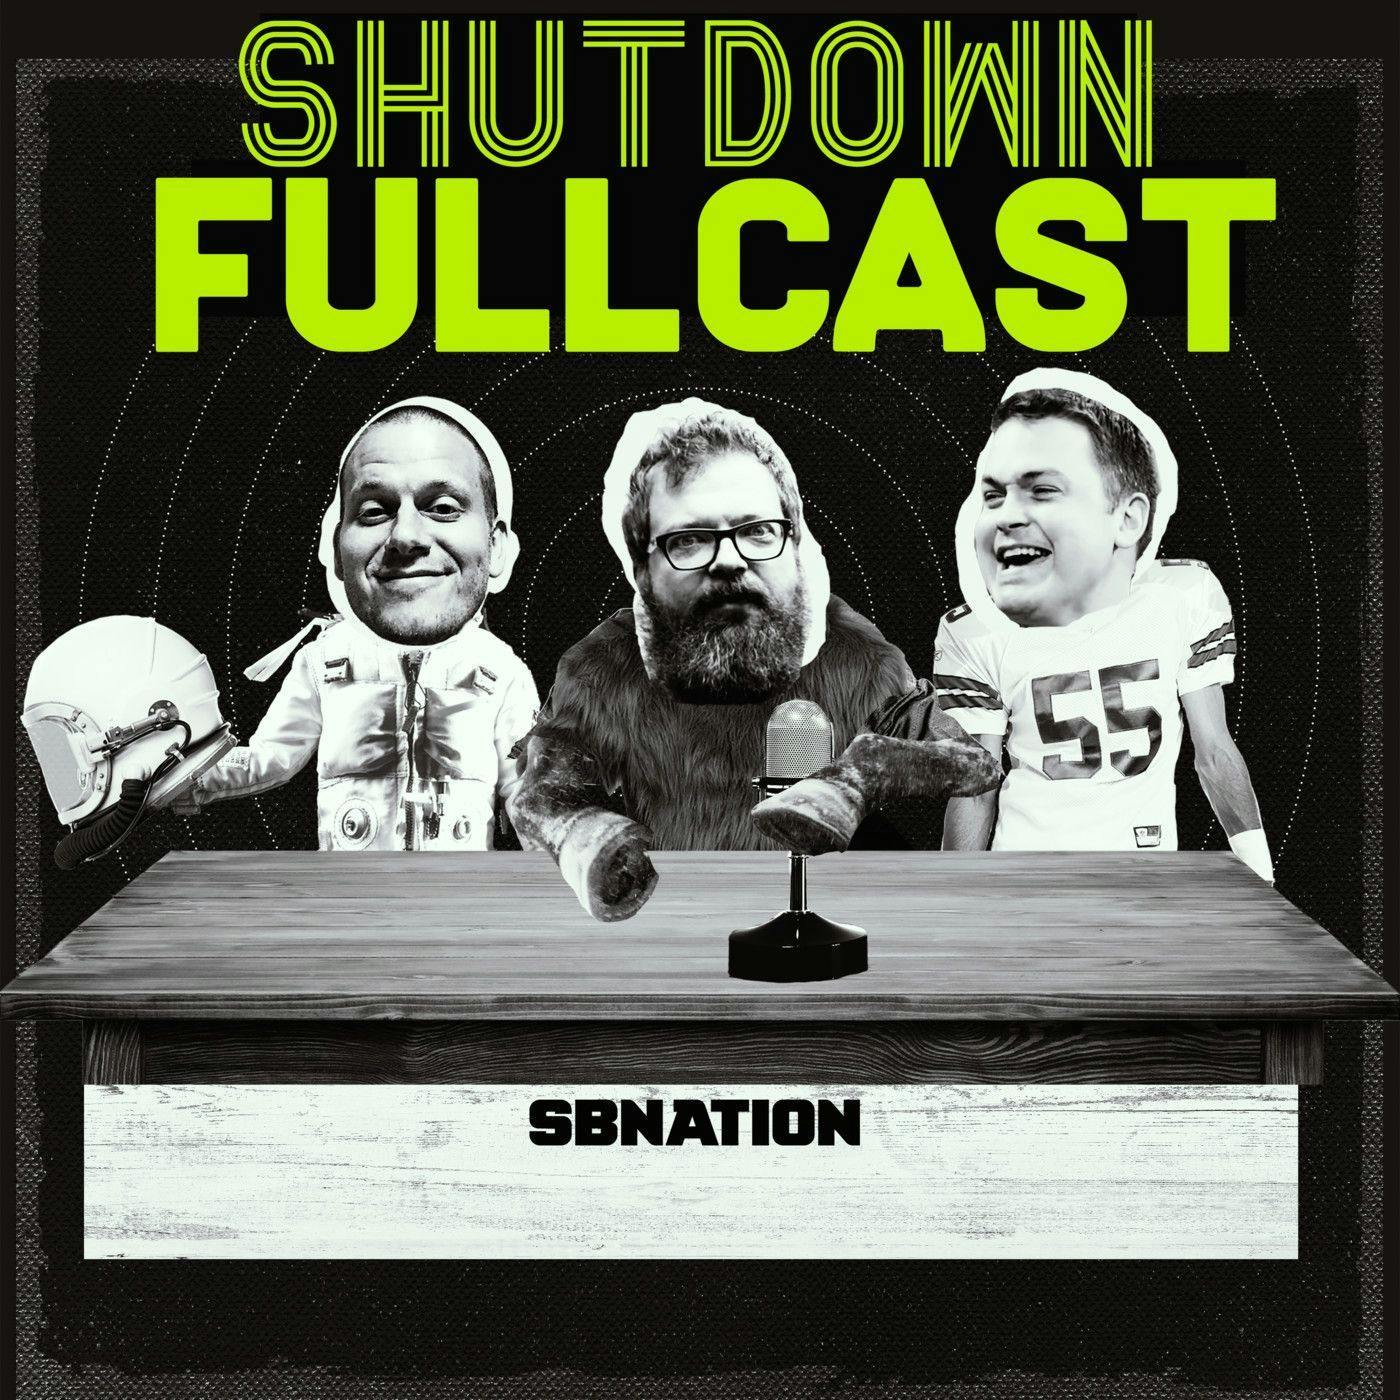 Shutdown Fullcast 40 for 40: The New Mexico Bowl